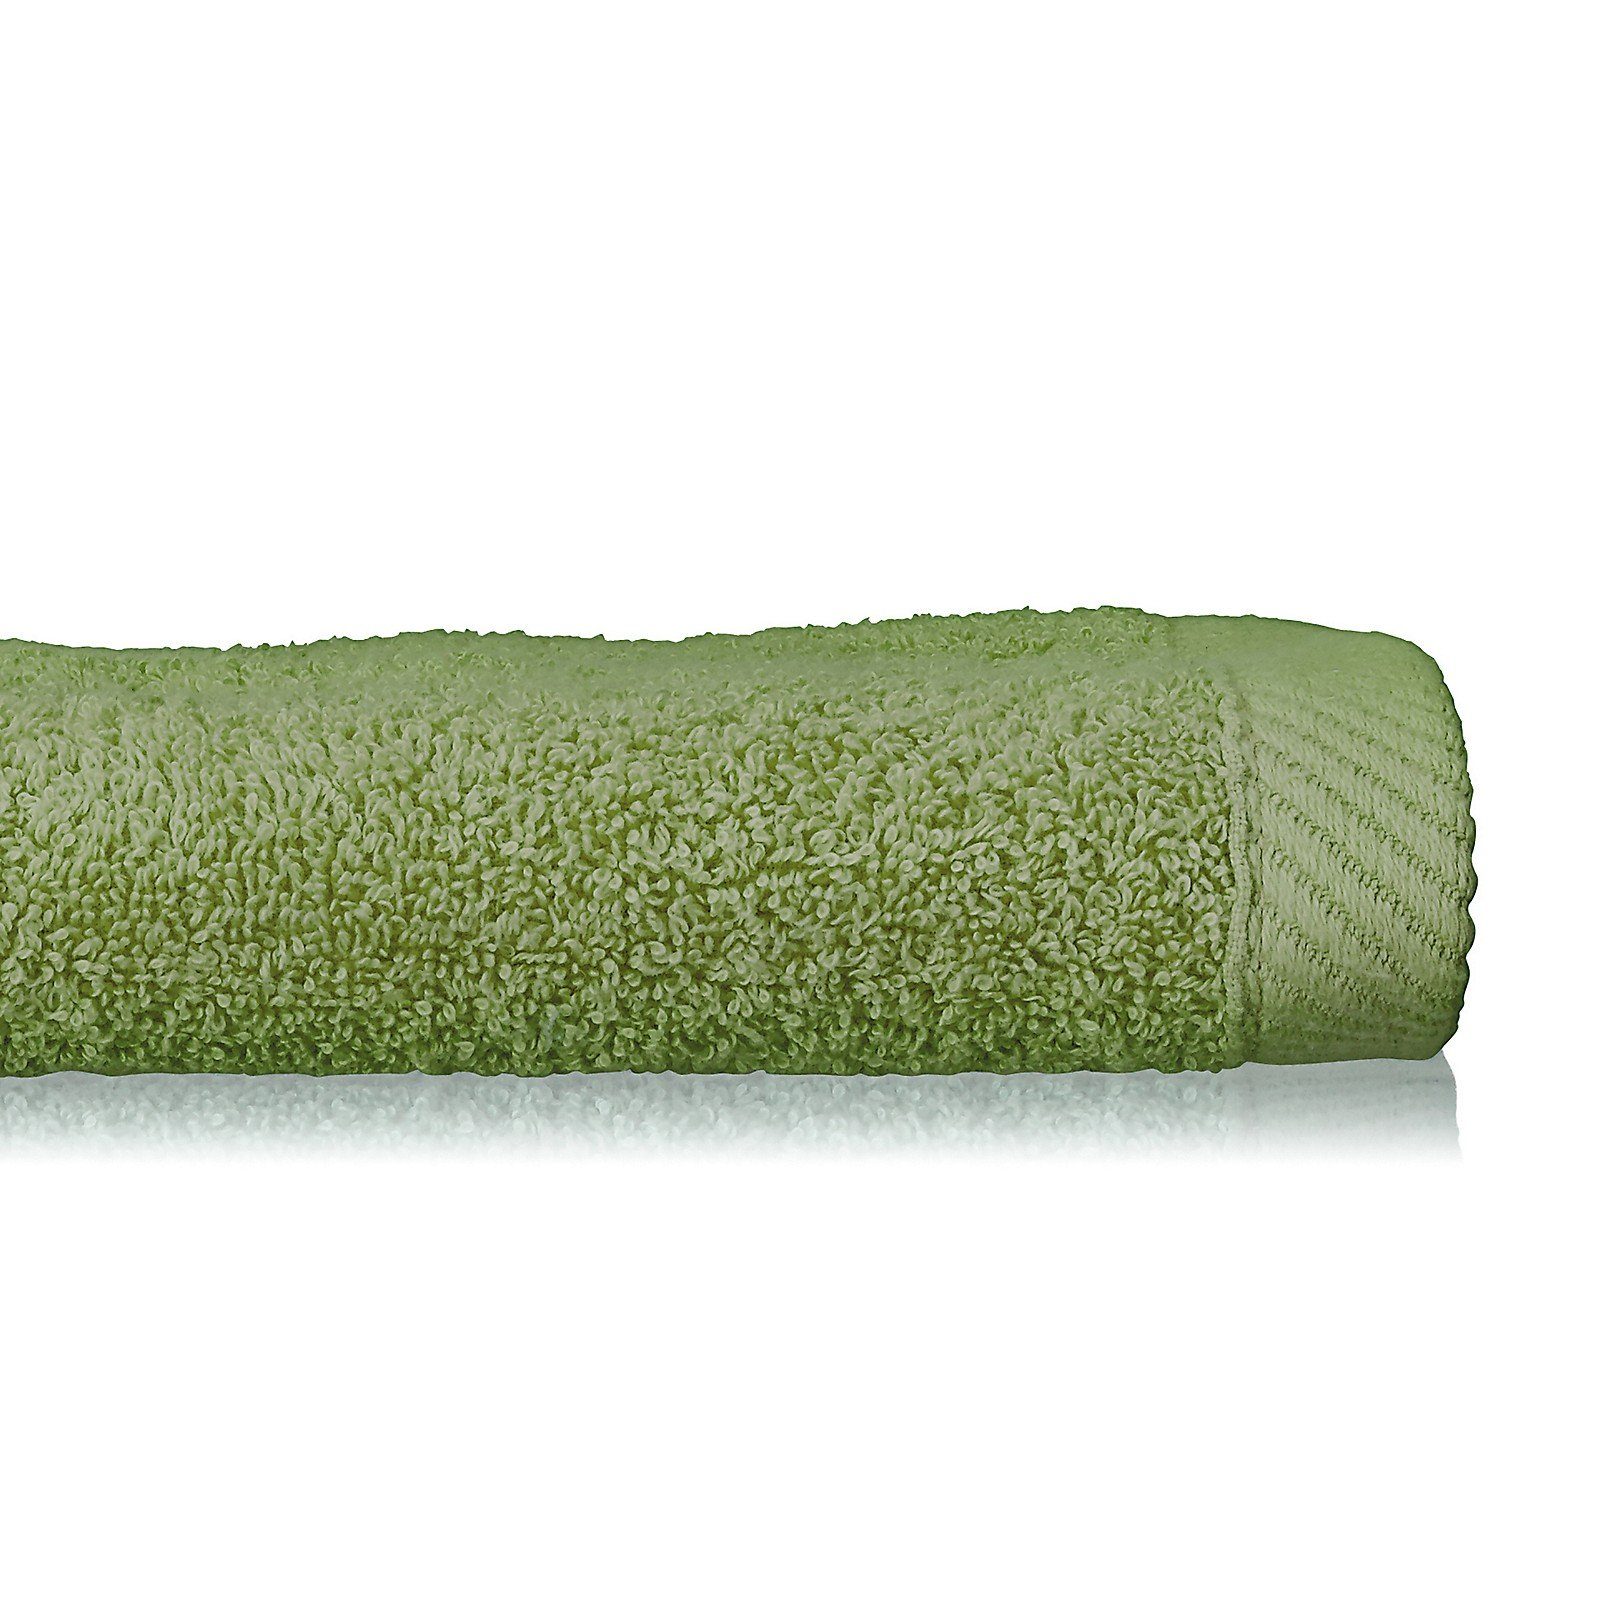 moosgrün waschbar, bis 60°C fusselarm, Gästehandtuch Ladessa, flauschig, trocknergeeignet kela saugfähig,